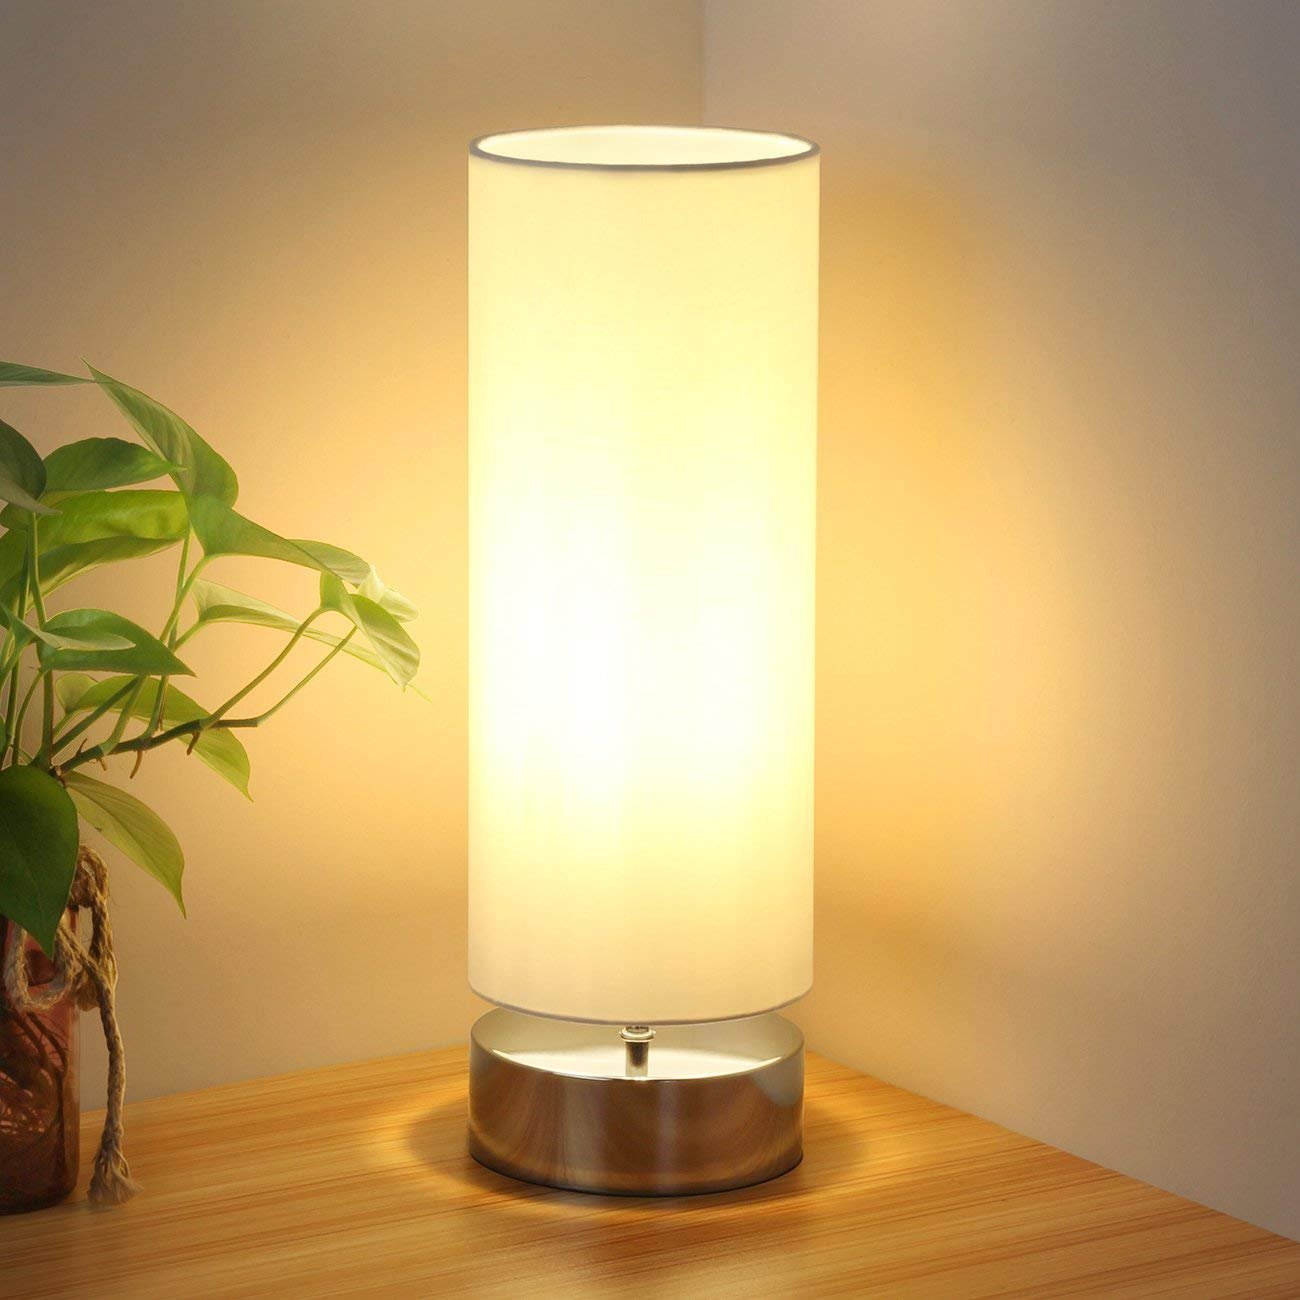 Best Table Lamp For Living Room